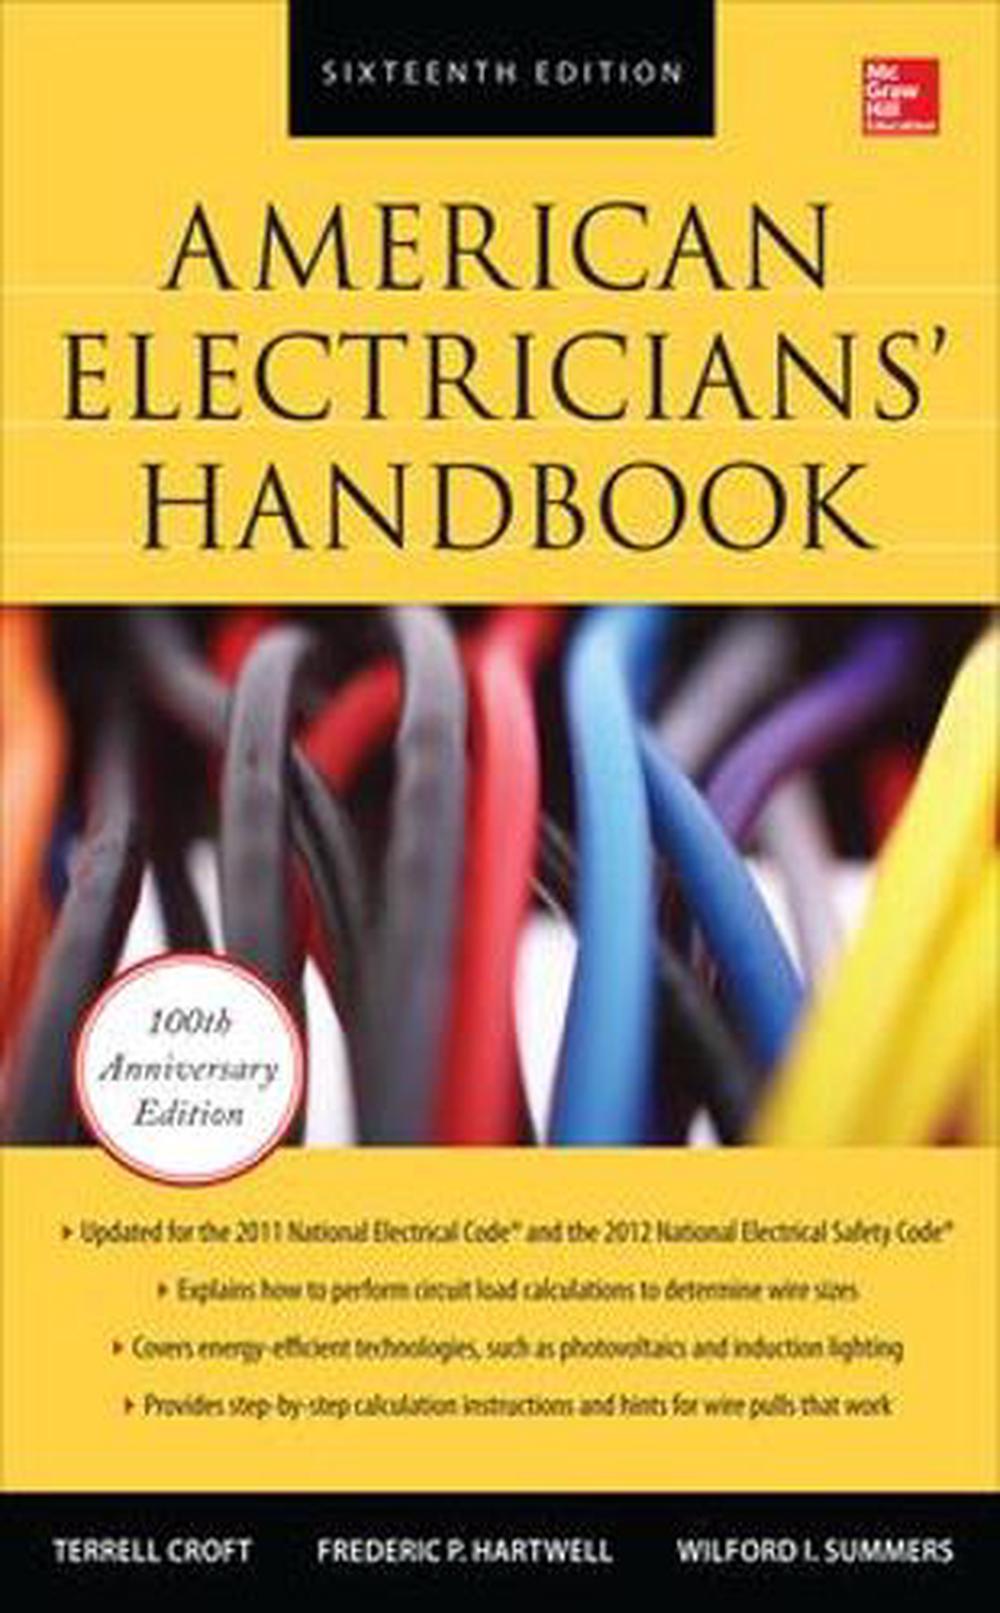 electrician handbook free download